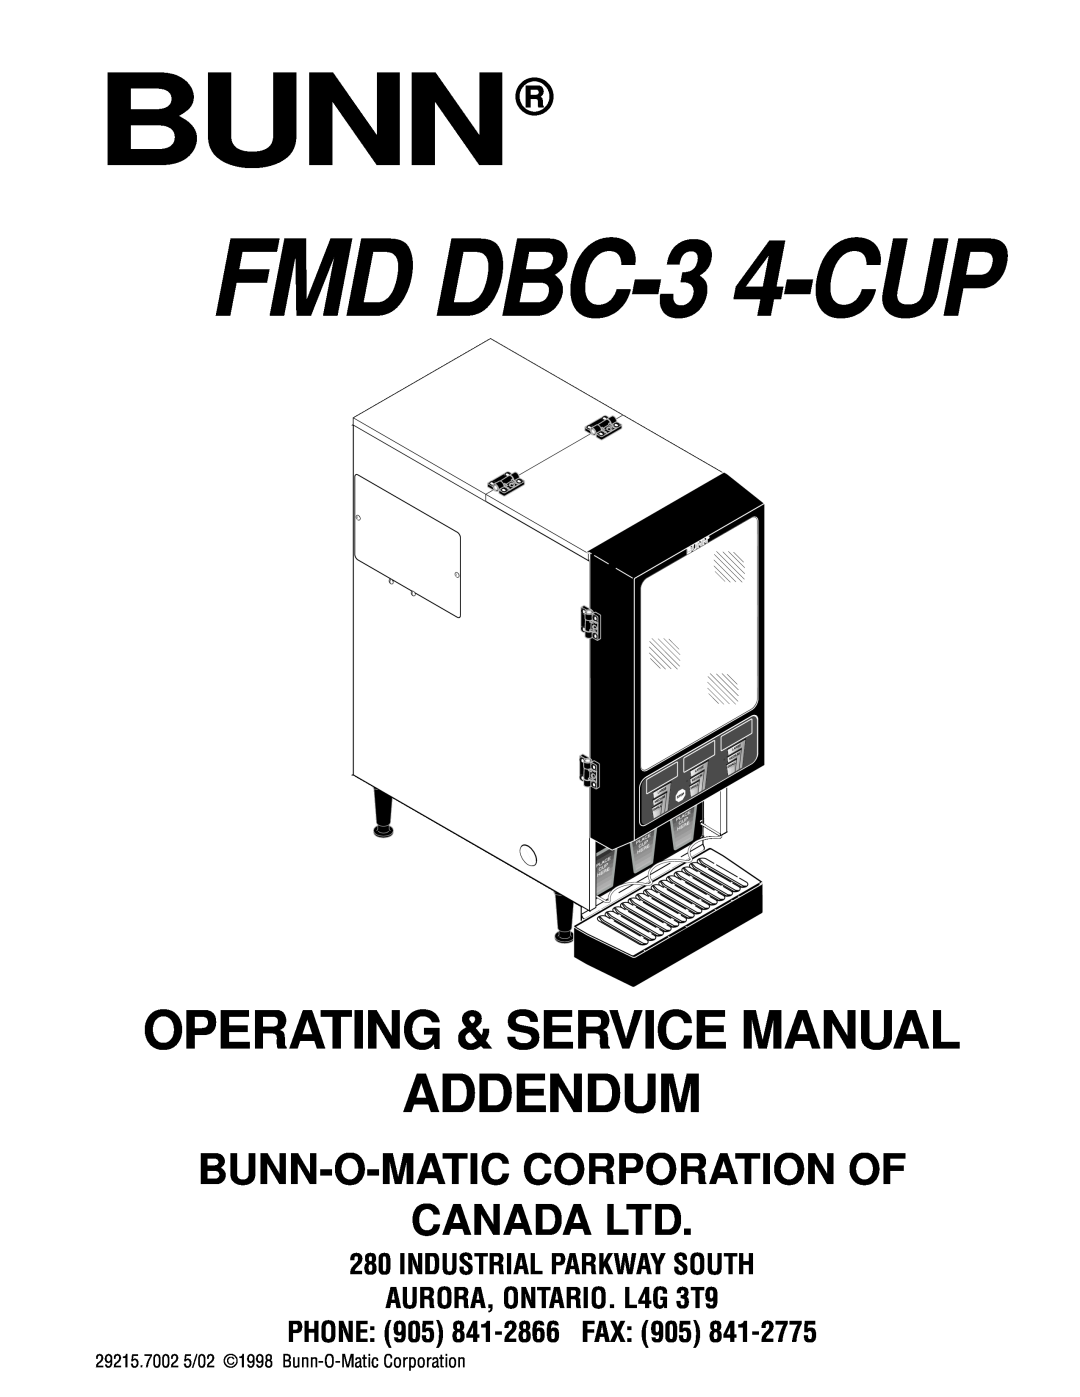 Bunn FMD DBC-3 4-CUP service manual Bunn, Industrial Parkway South, AURORA, ONTARIO. L4G 3T9, PHONE 905 841-2866FAX 